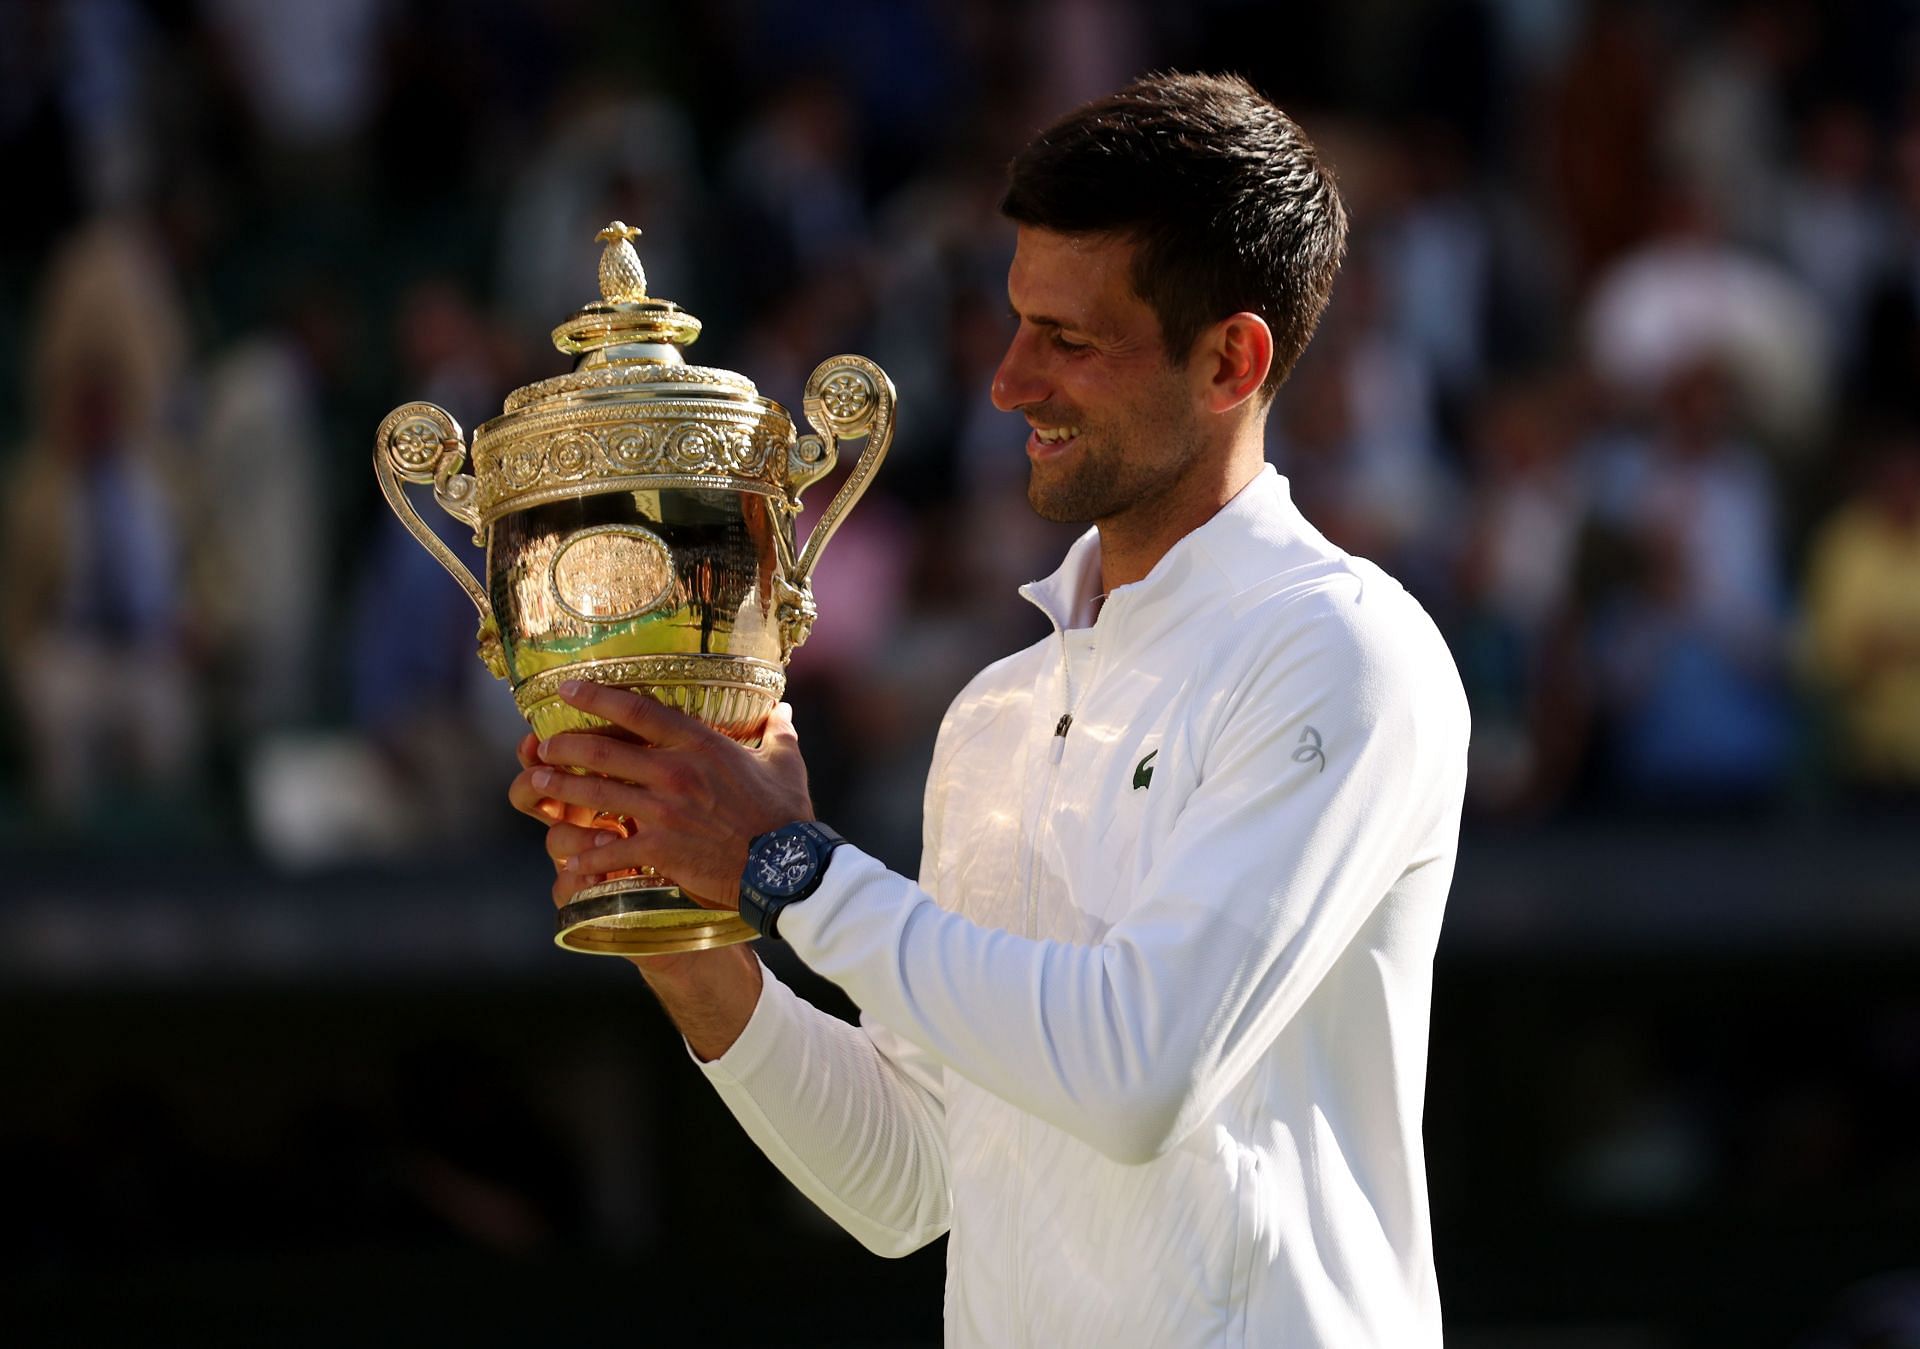 Novak Djokovic after winning his seventh title at Wimbledon